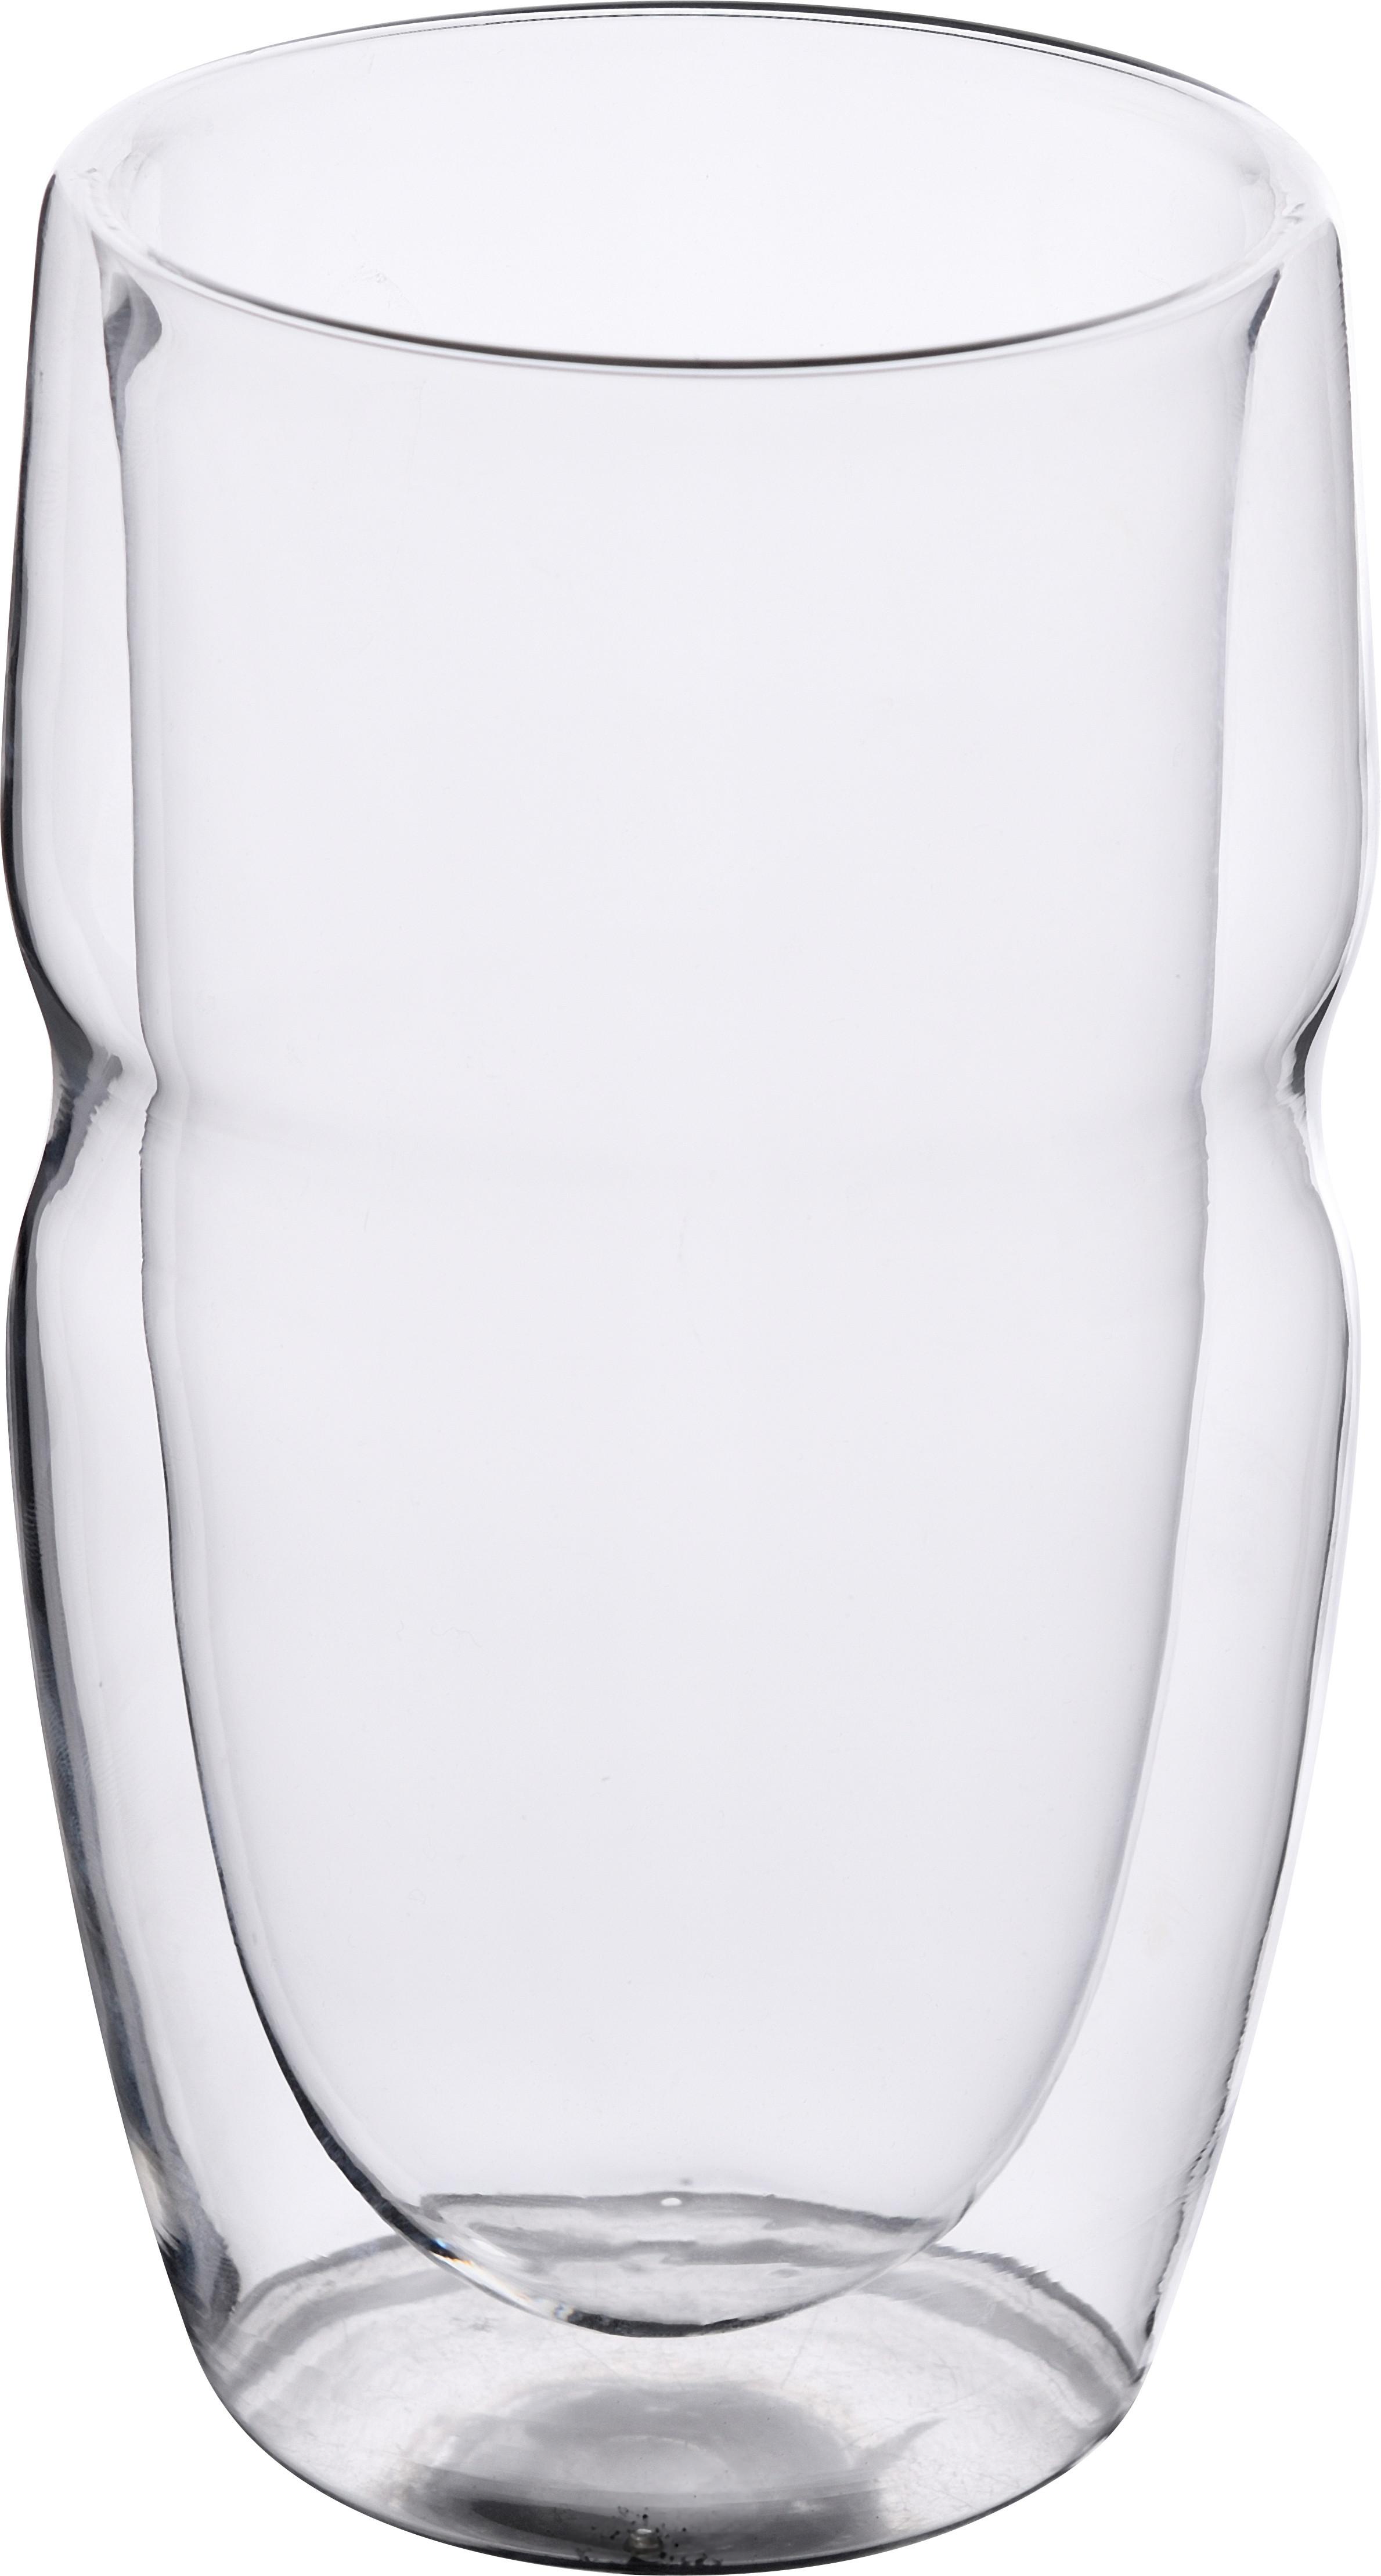 Pahar long drink Fusion - clar, Modern, sticlă - Premium Living